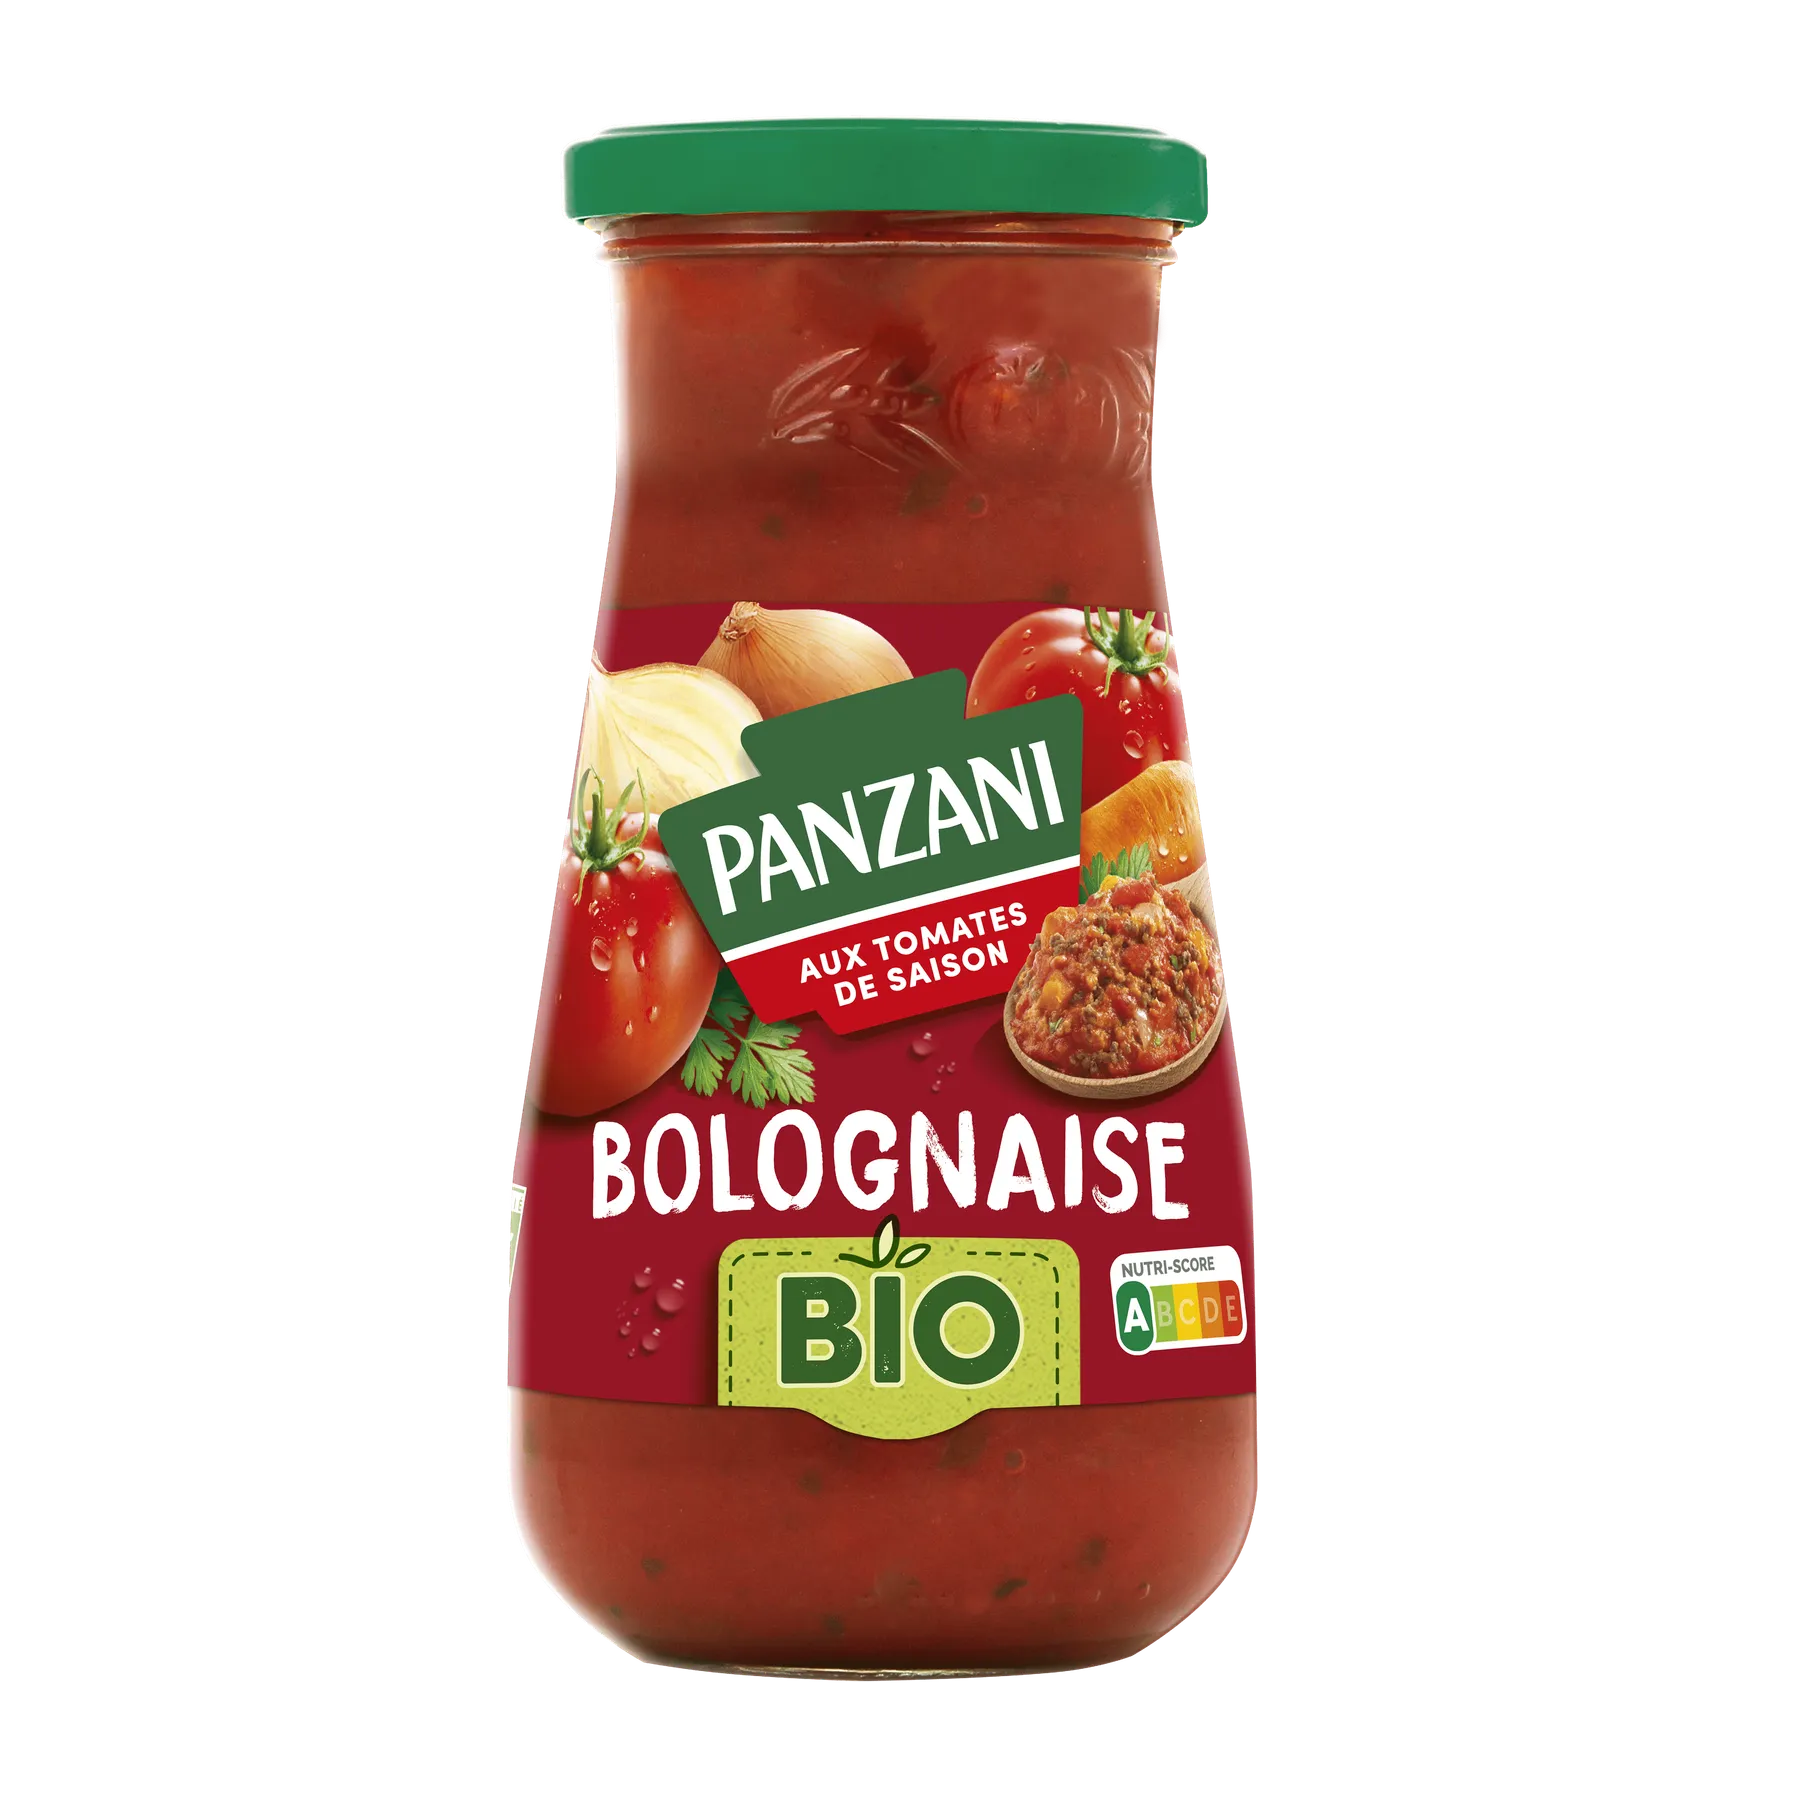 panzani_bolognaise_bio